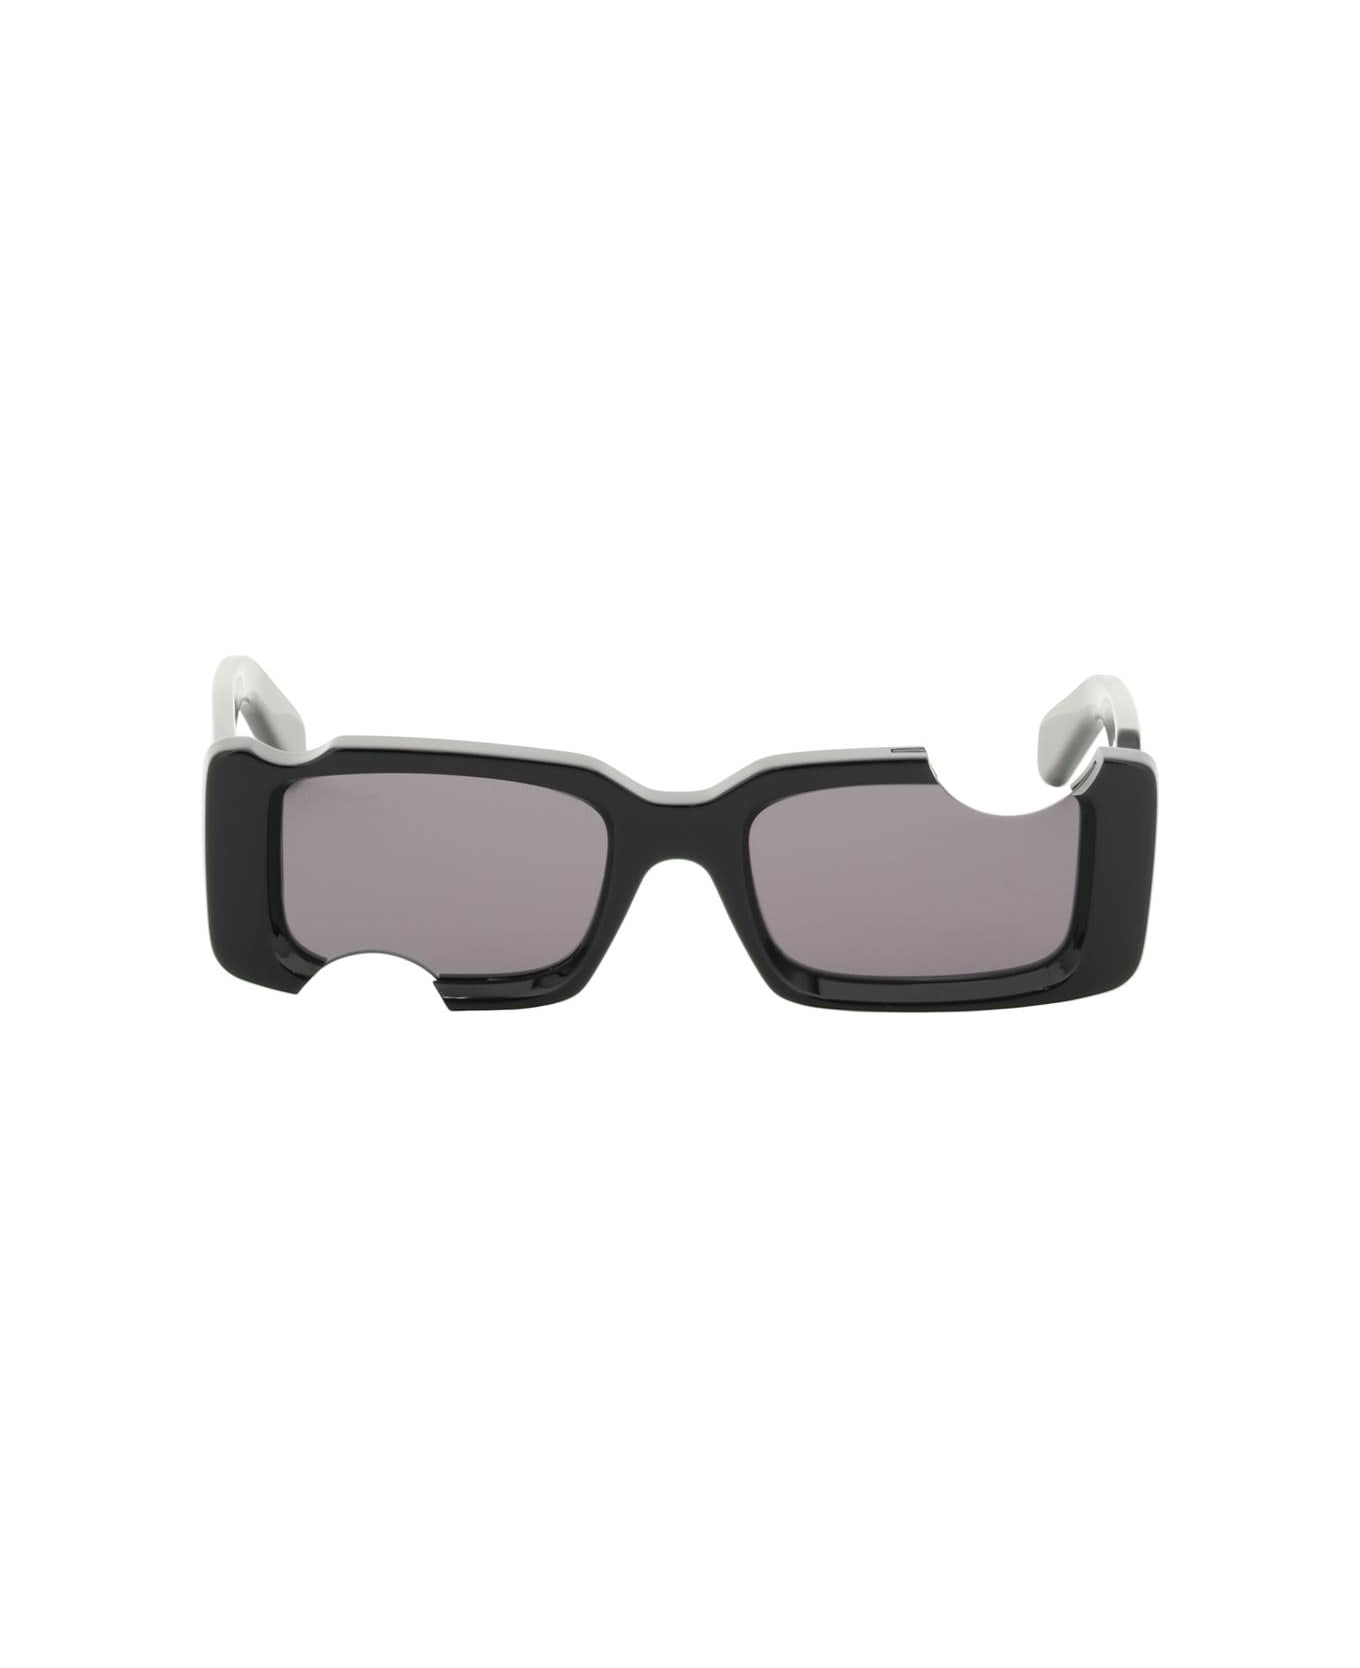 Off-White Cady Sunglasses - BLACK DARK GREY (Black)